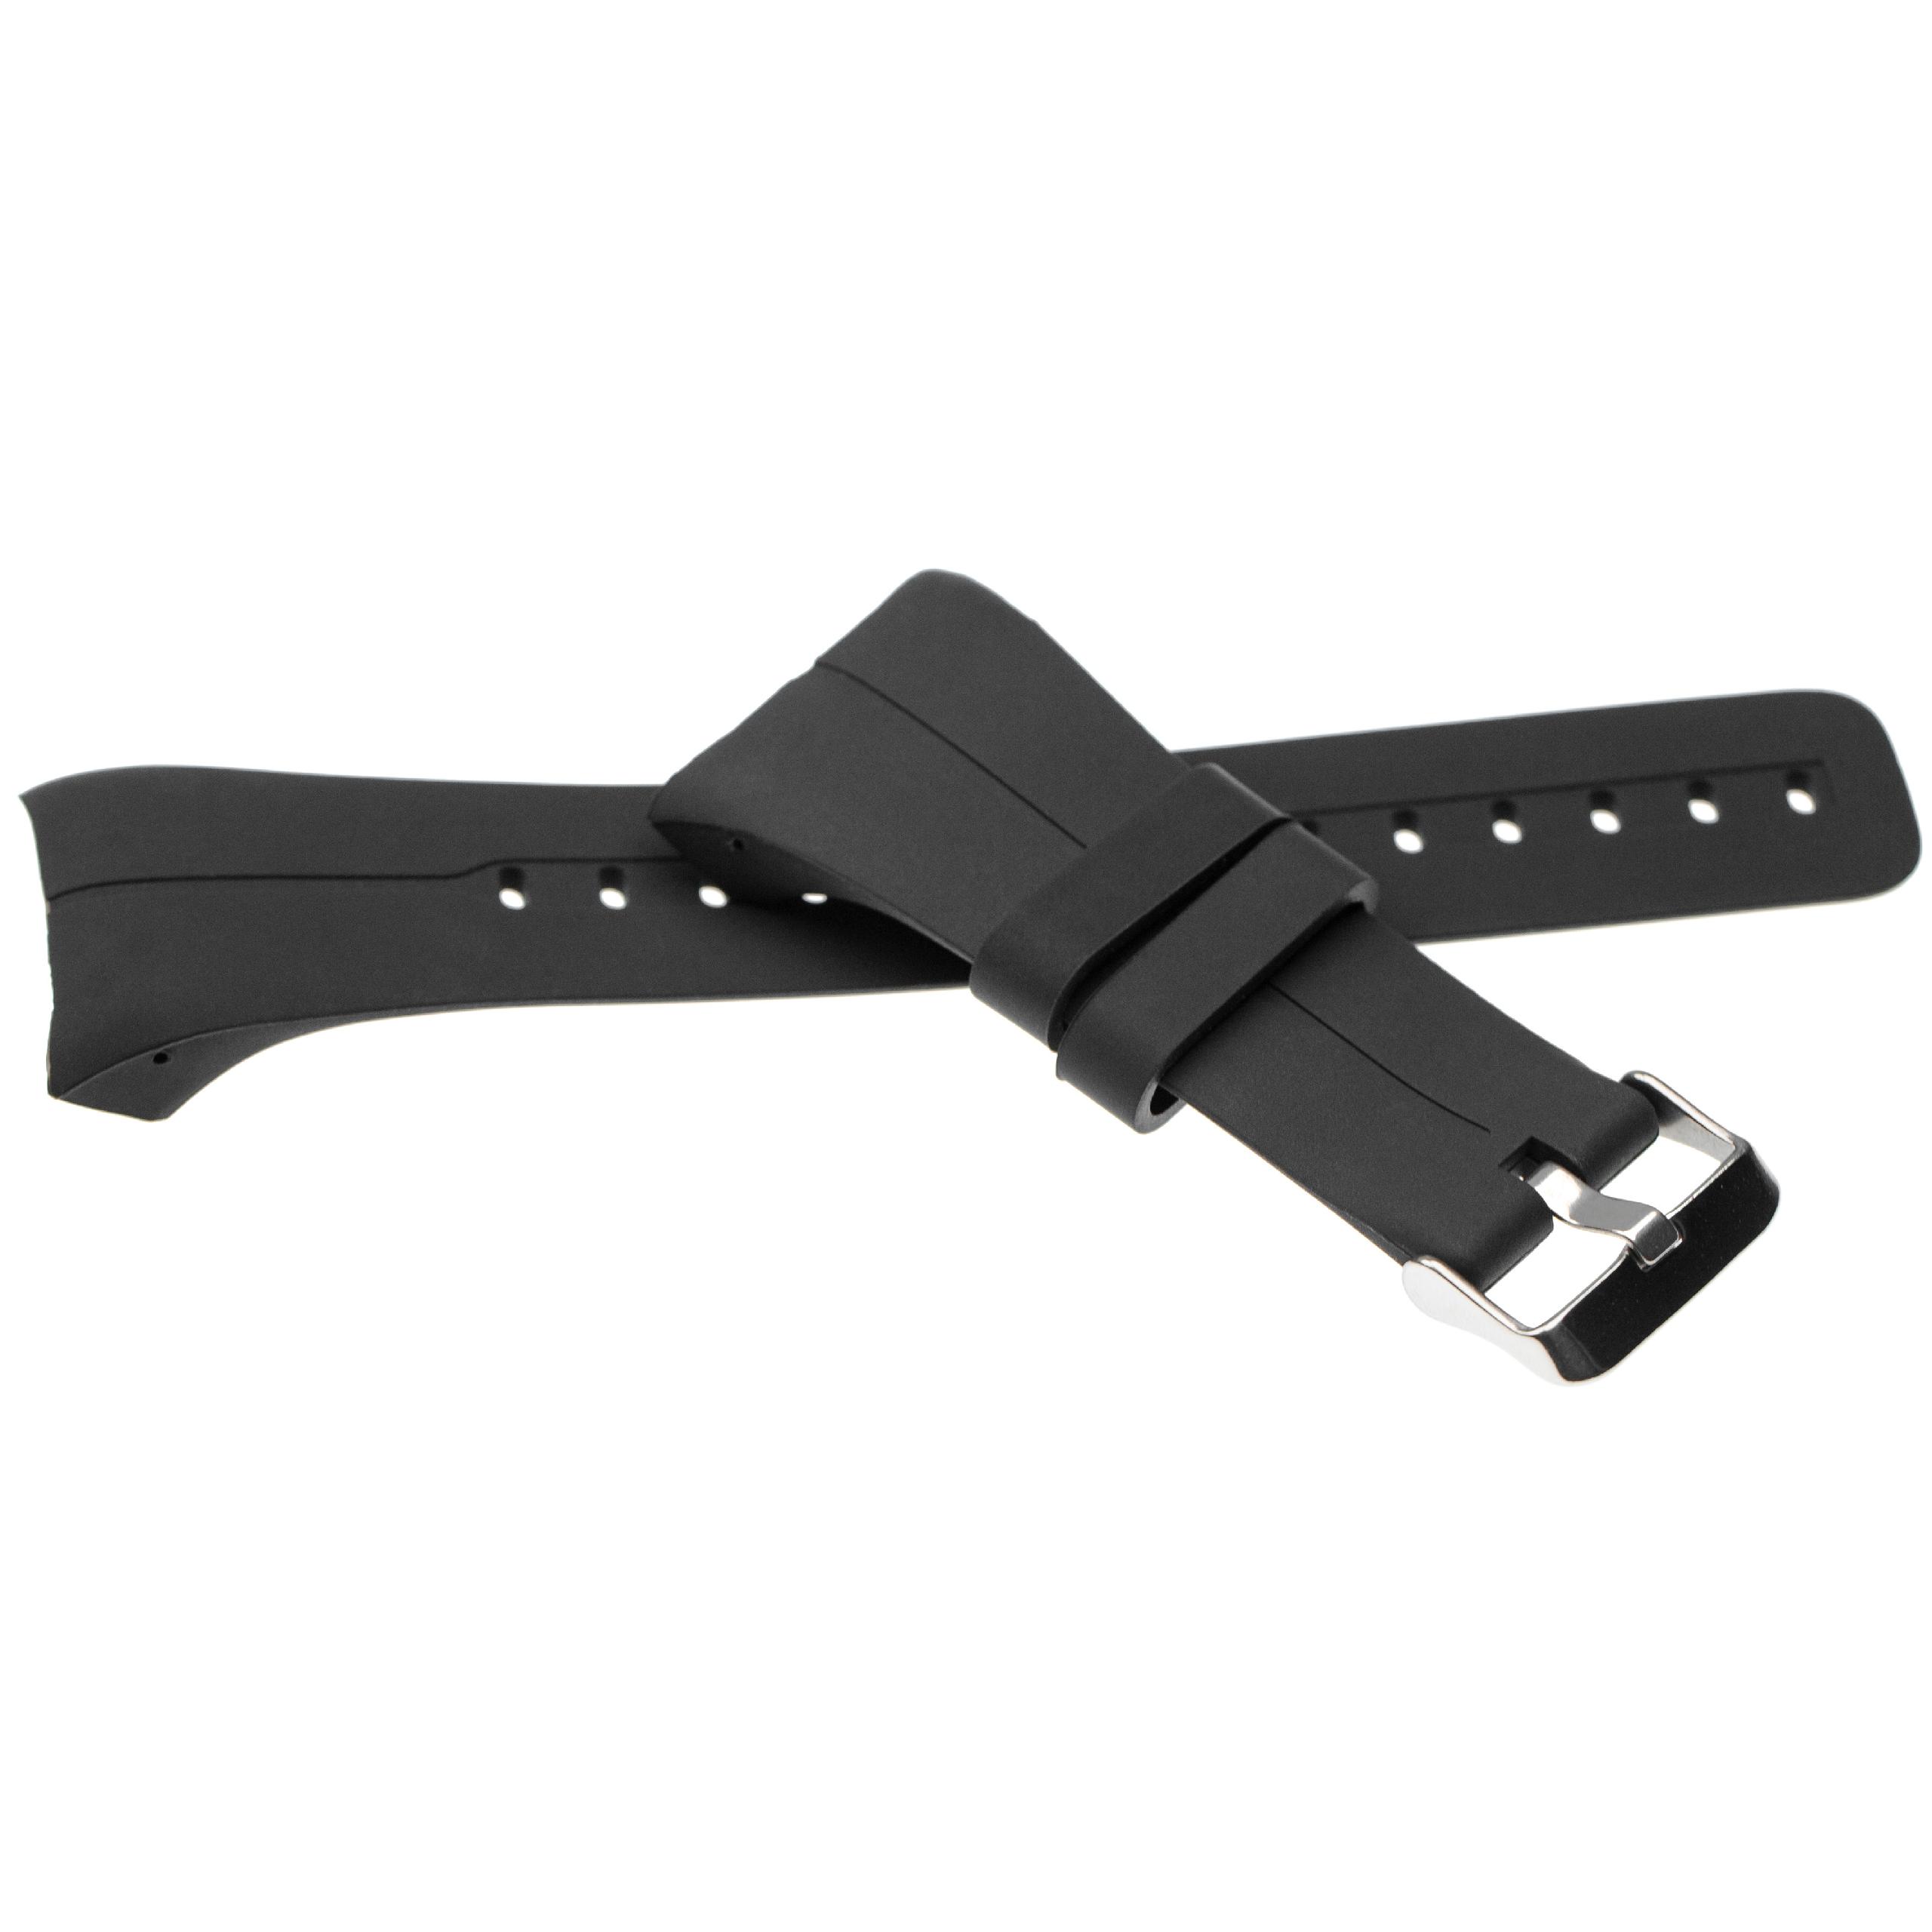 Armband für Polar Smartwatch - 14,5 + 8,9 cm lang, Silikon, schwarz